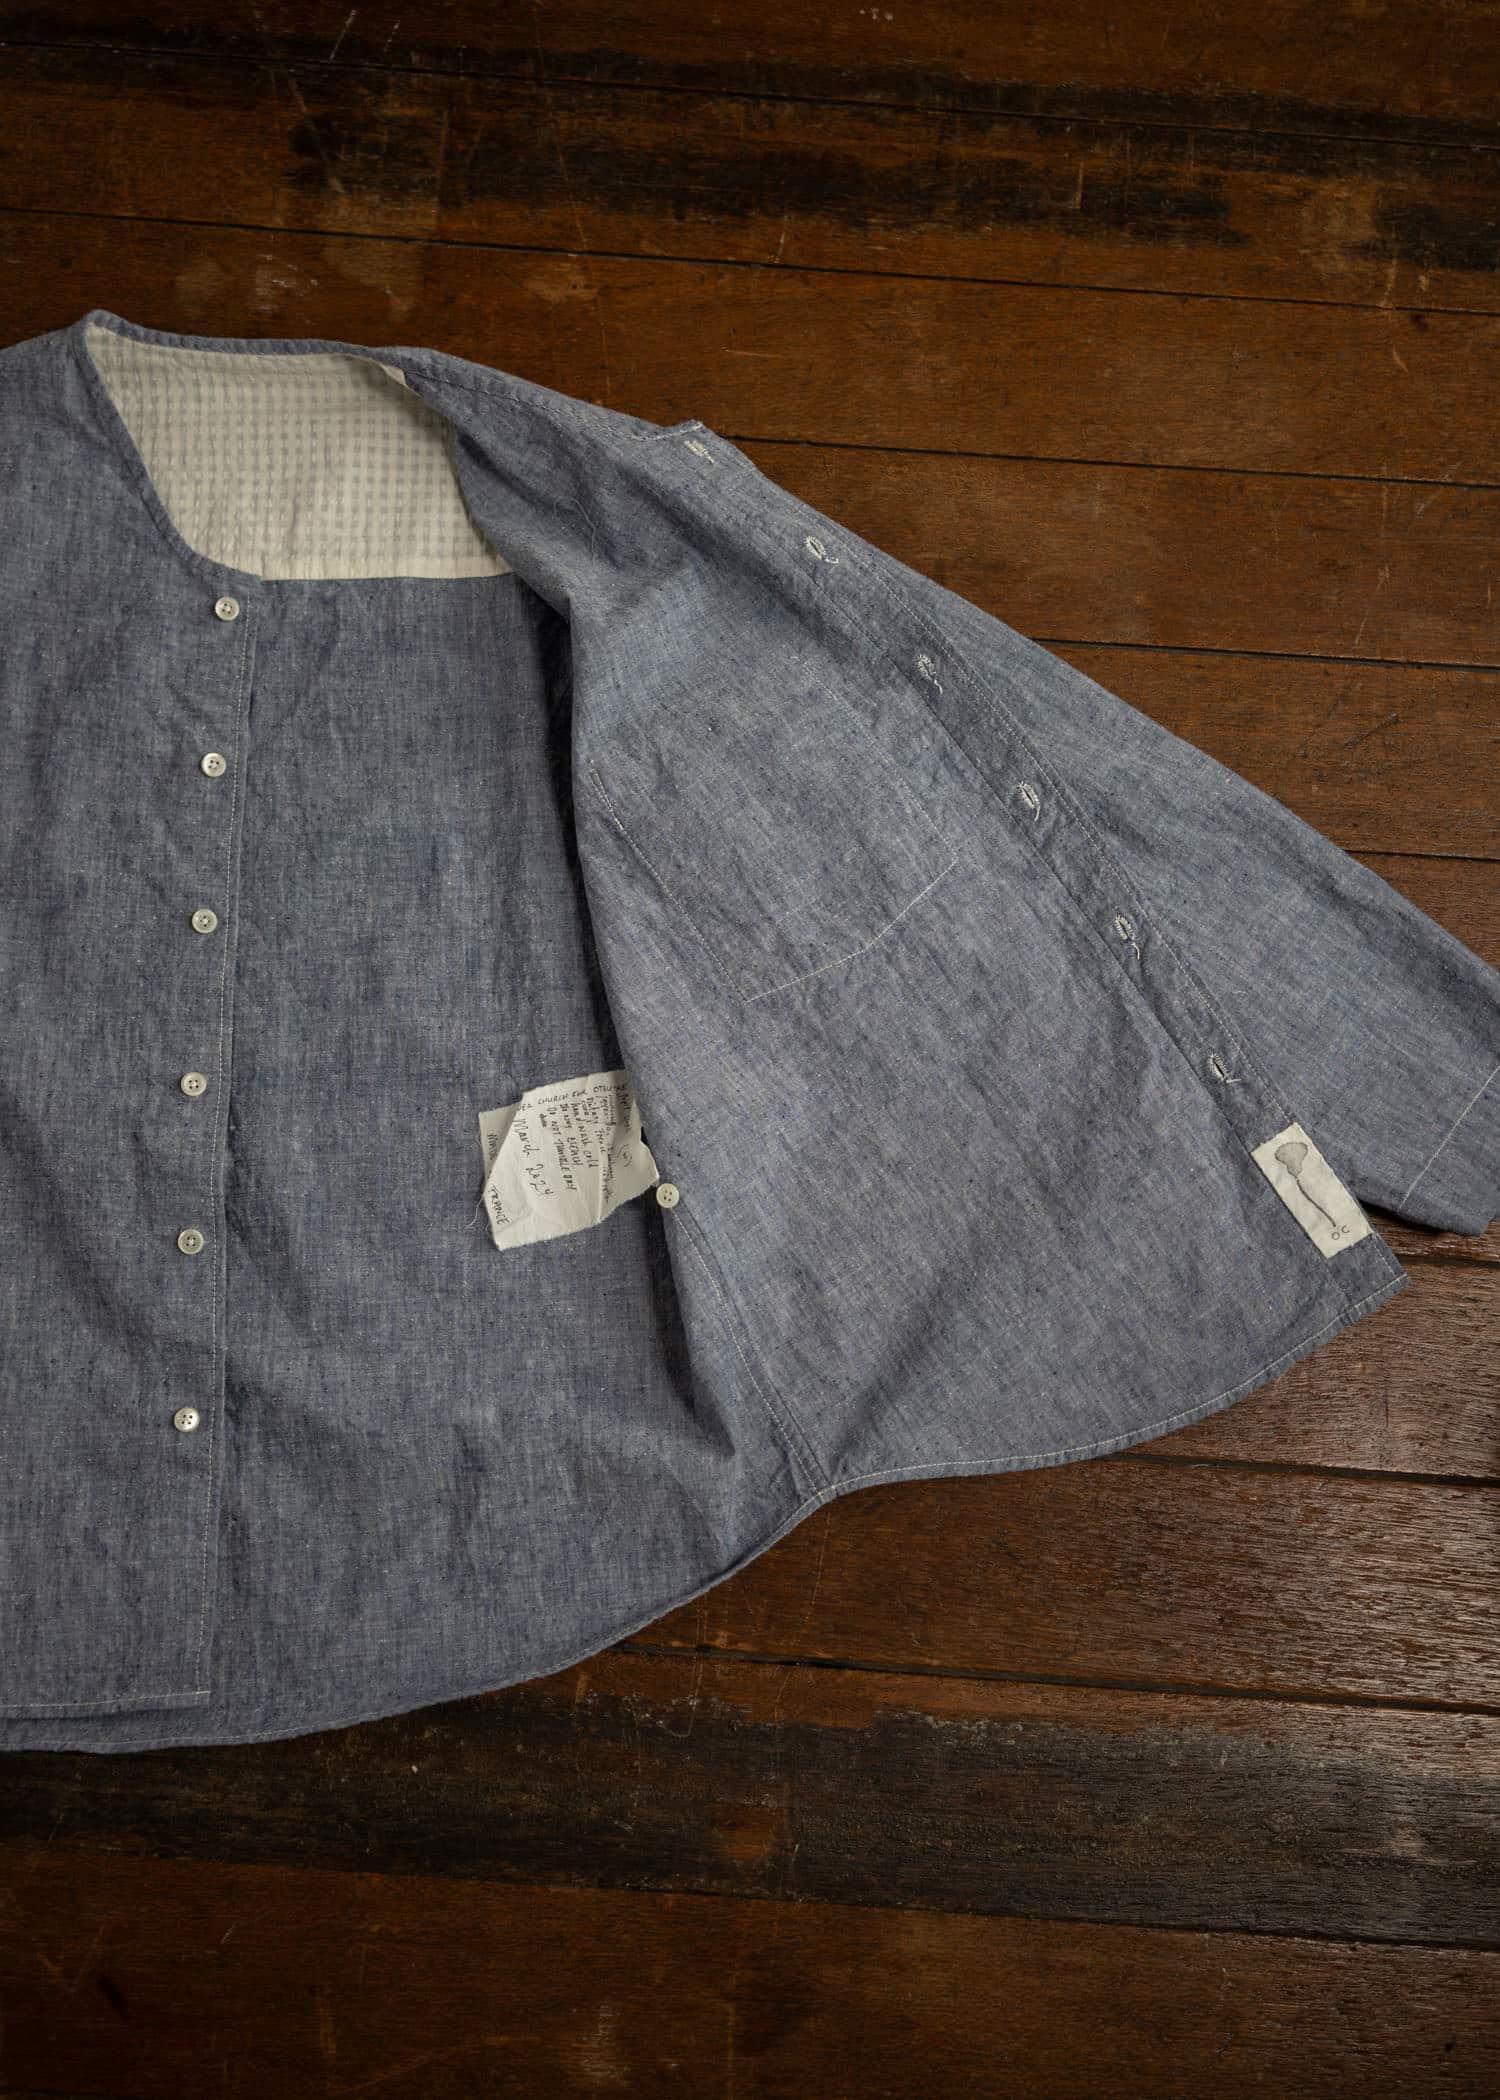 OLIVER CHURCH soft shirt (1950s60s chambray)